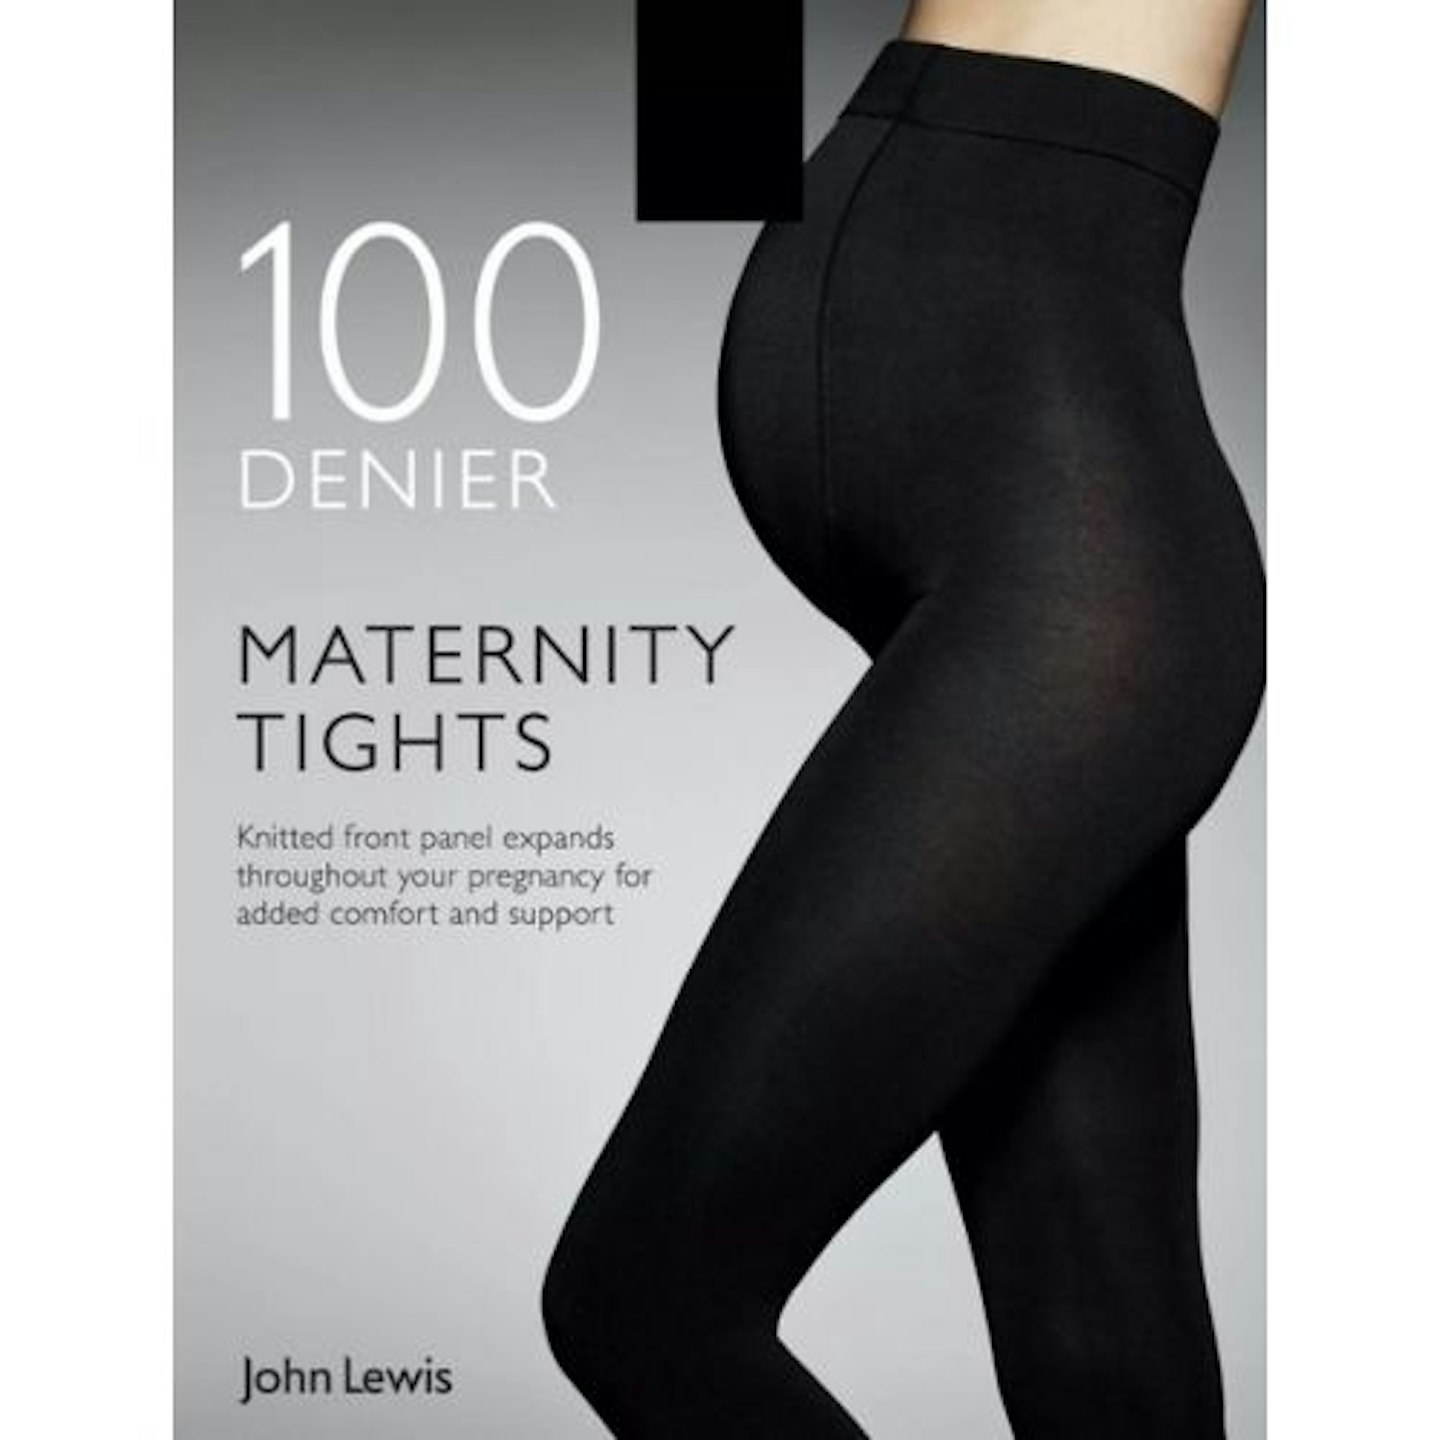 100 denier opaque maternity tights